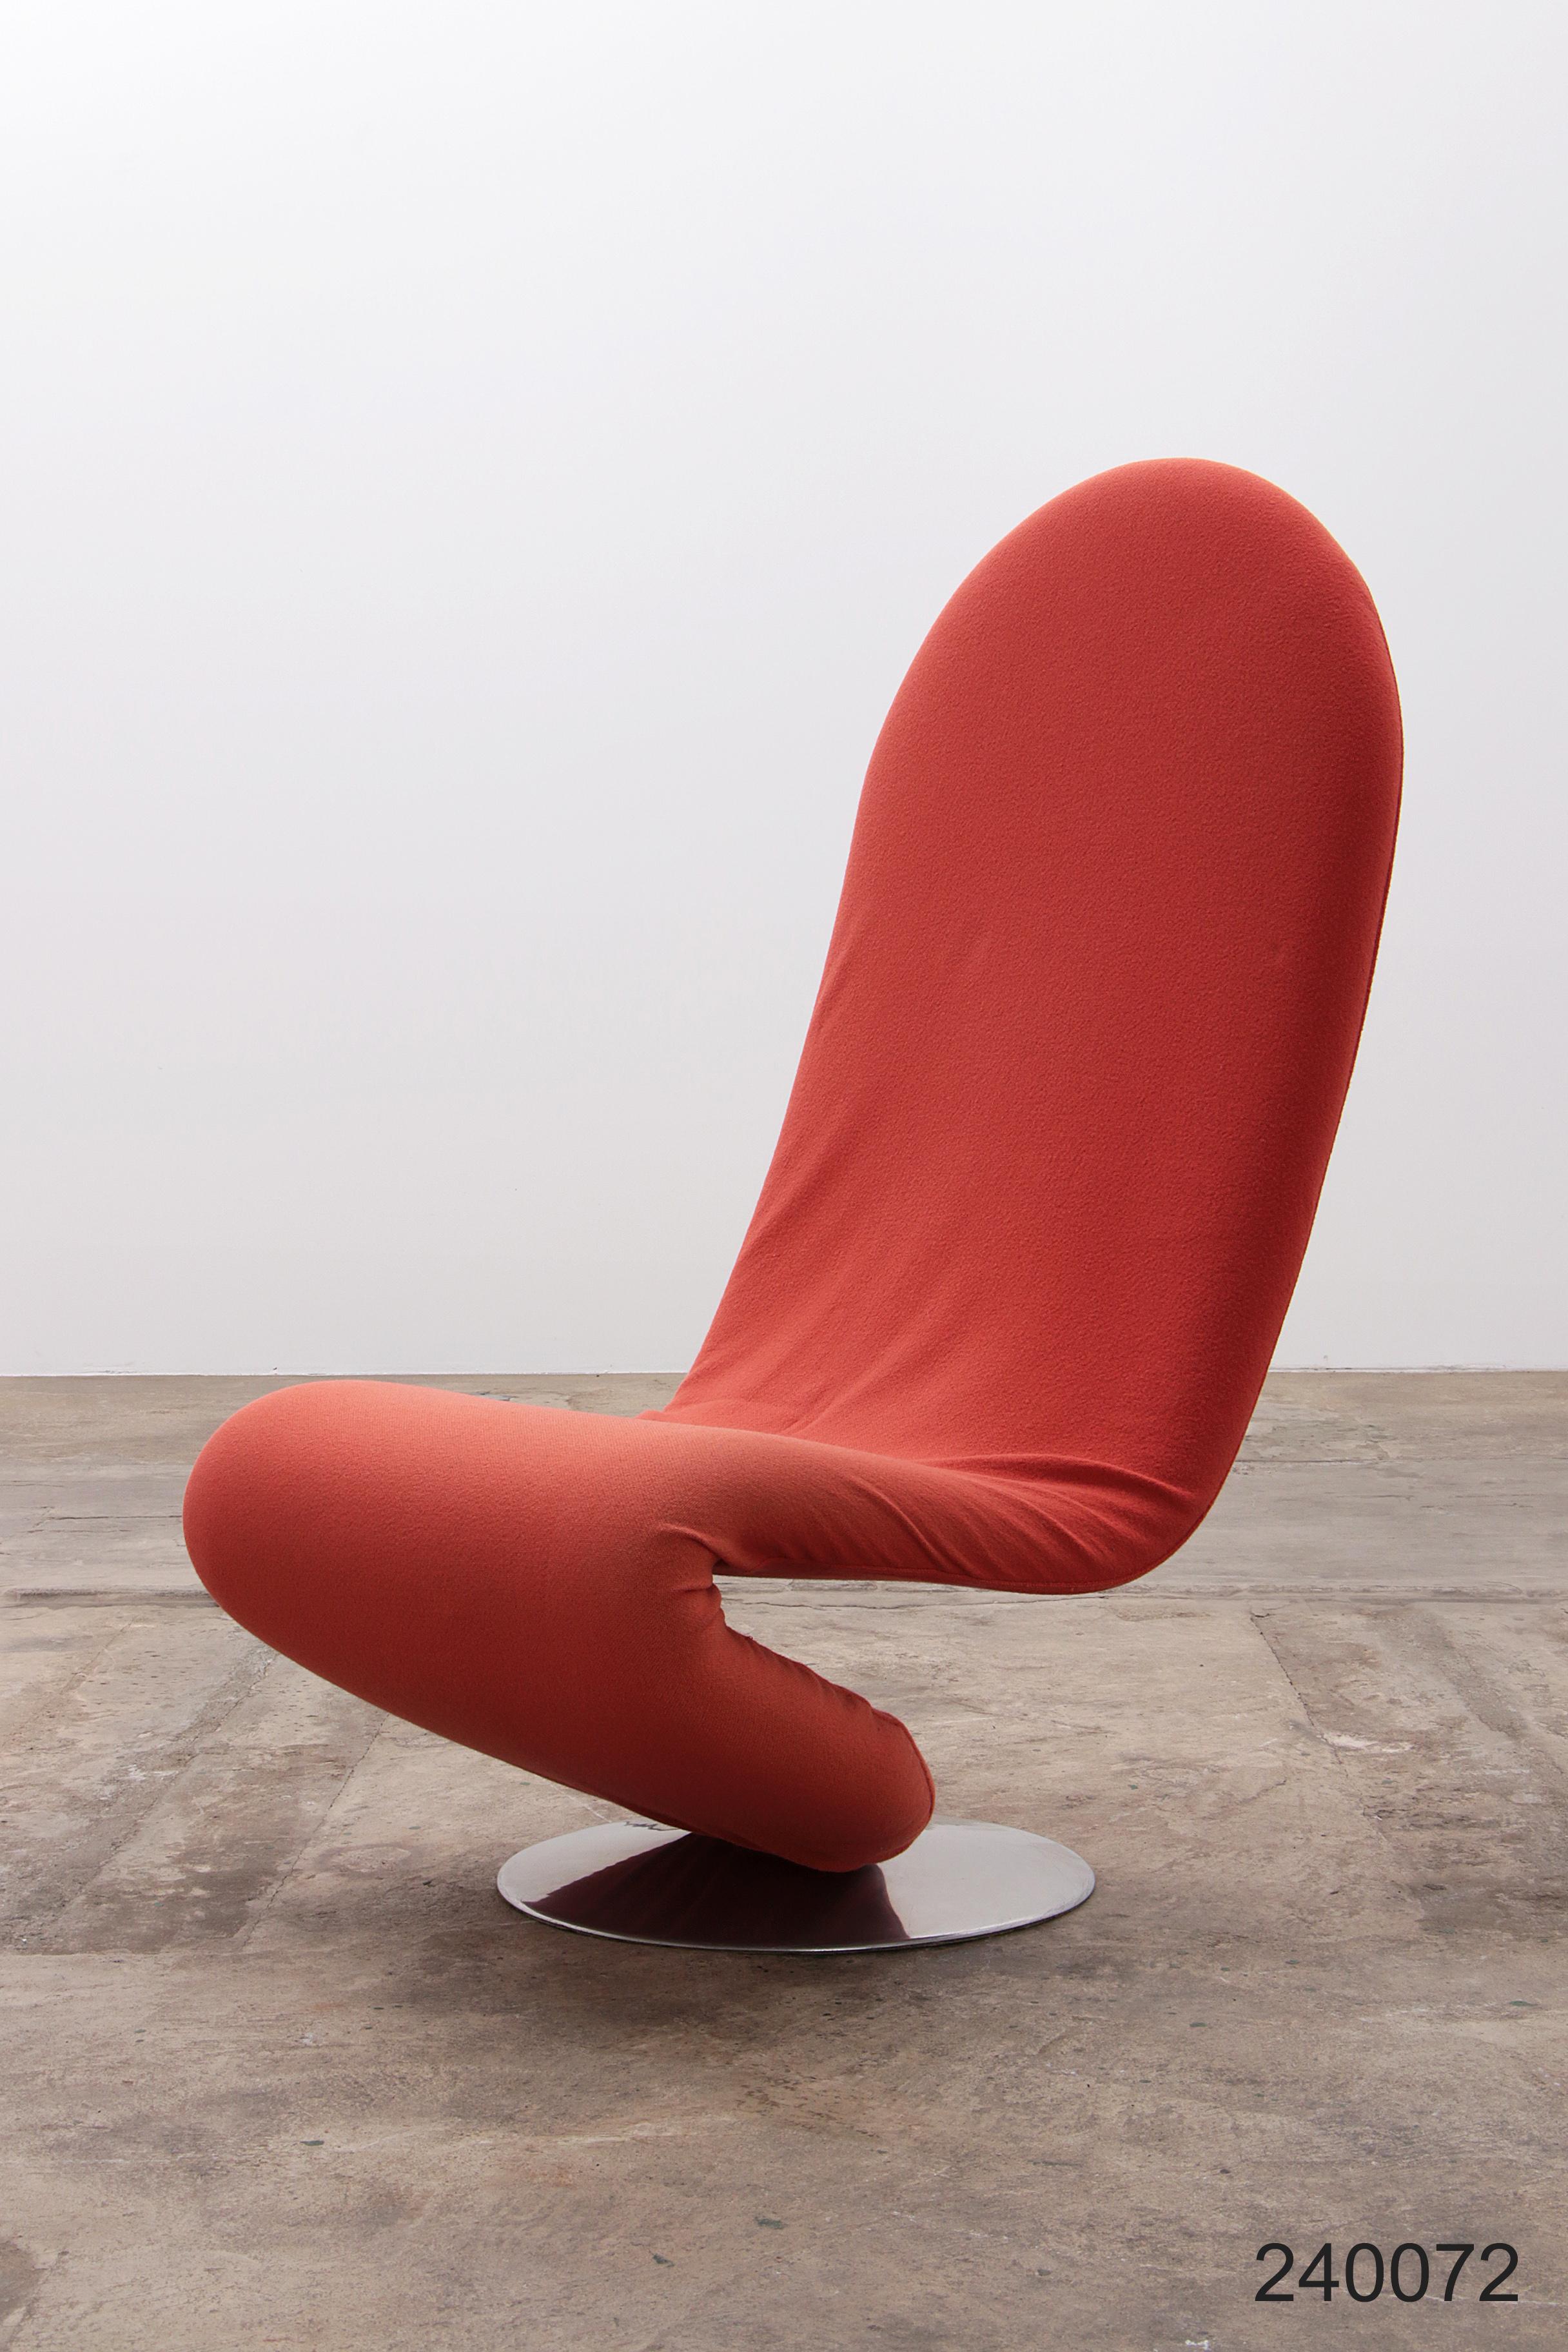 Verner Panton 1-2-3 Chair with High Backrest - Red/Orange, 1973 For Sale 9